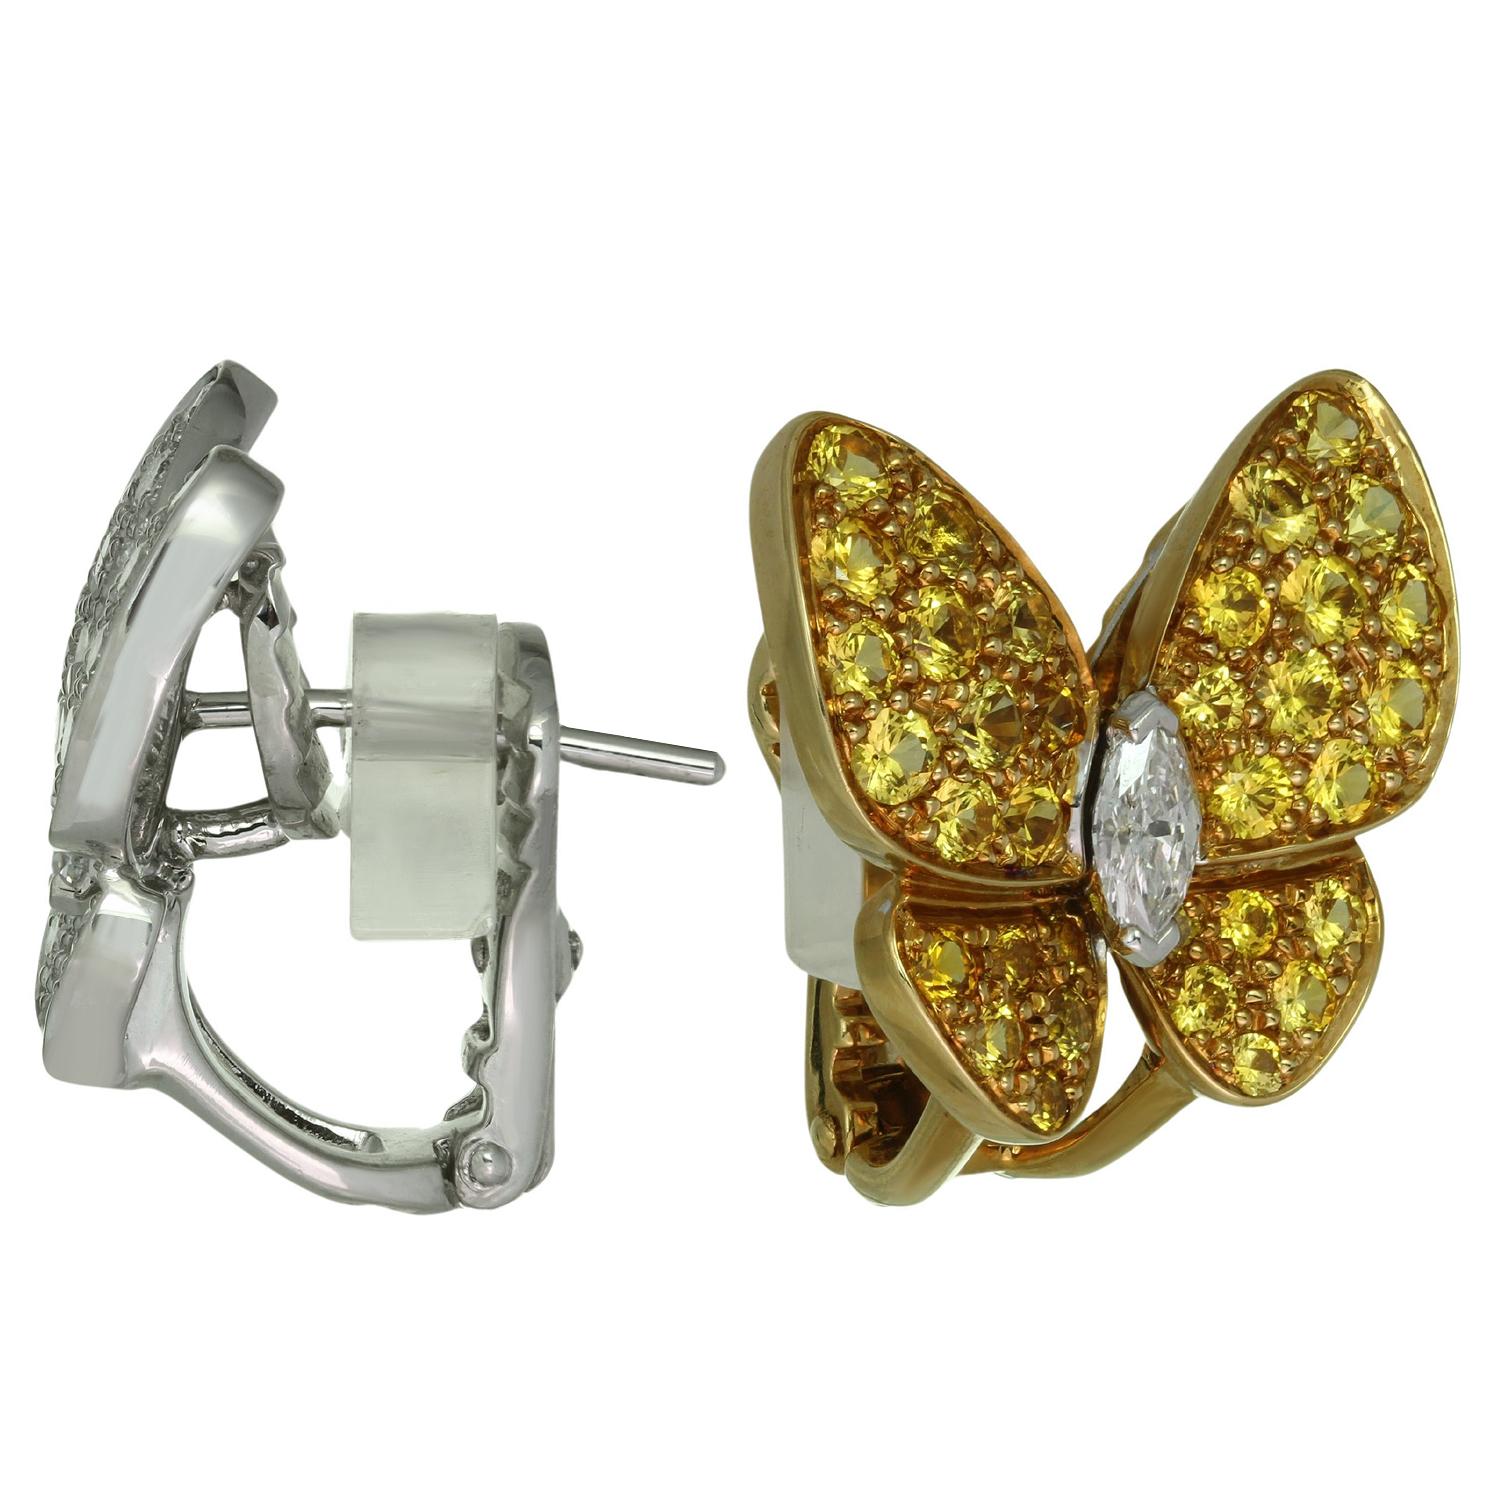 Brilliant Cut VAN CLEEF & ARPELS Butterfly Yellow Sapphire Diamond Gold Earrings